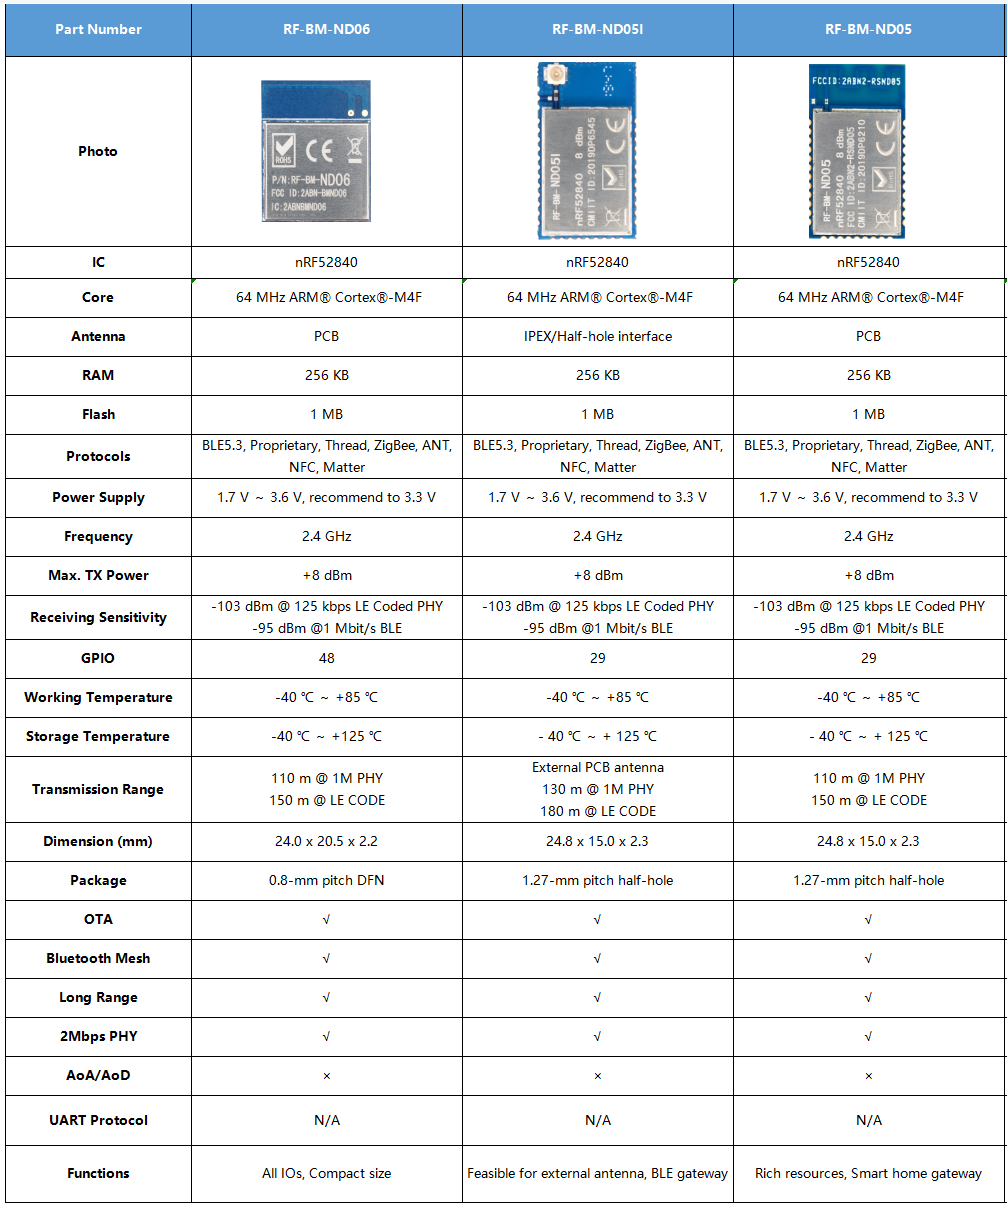 La tabla de diferentes parámetros entre RF-BM-ND05, RF-BM-ND05I, RF-BM-ND06